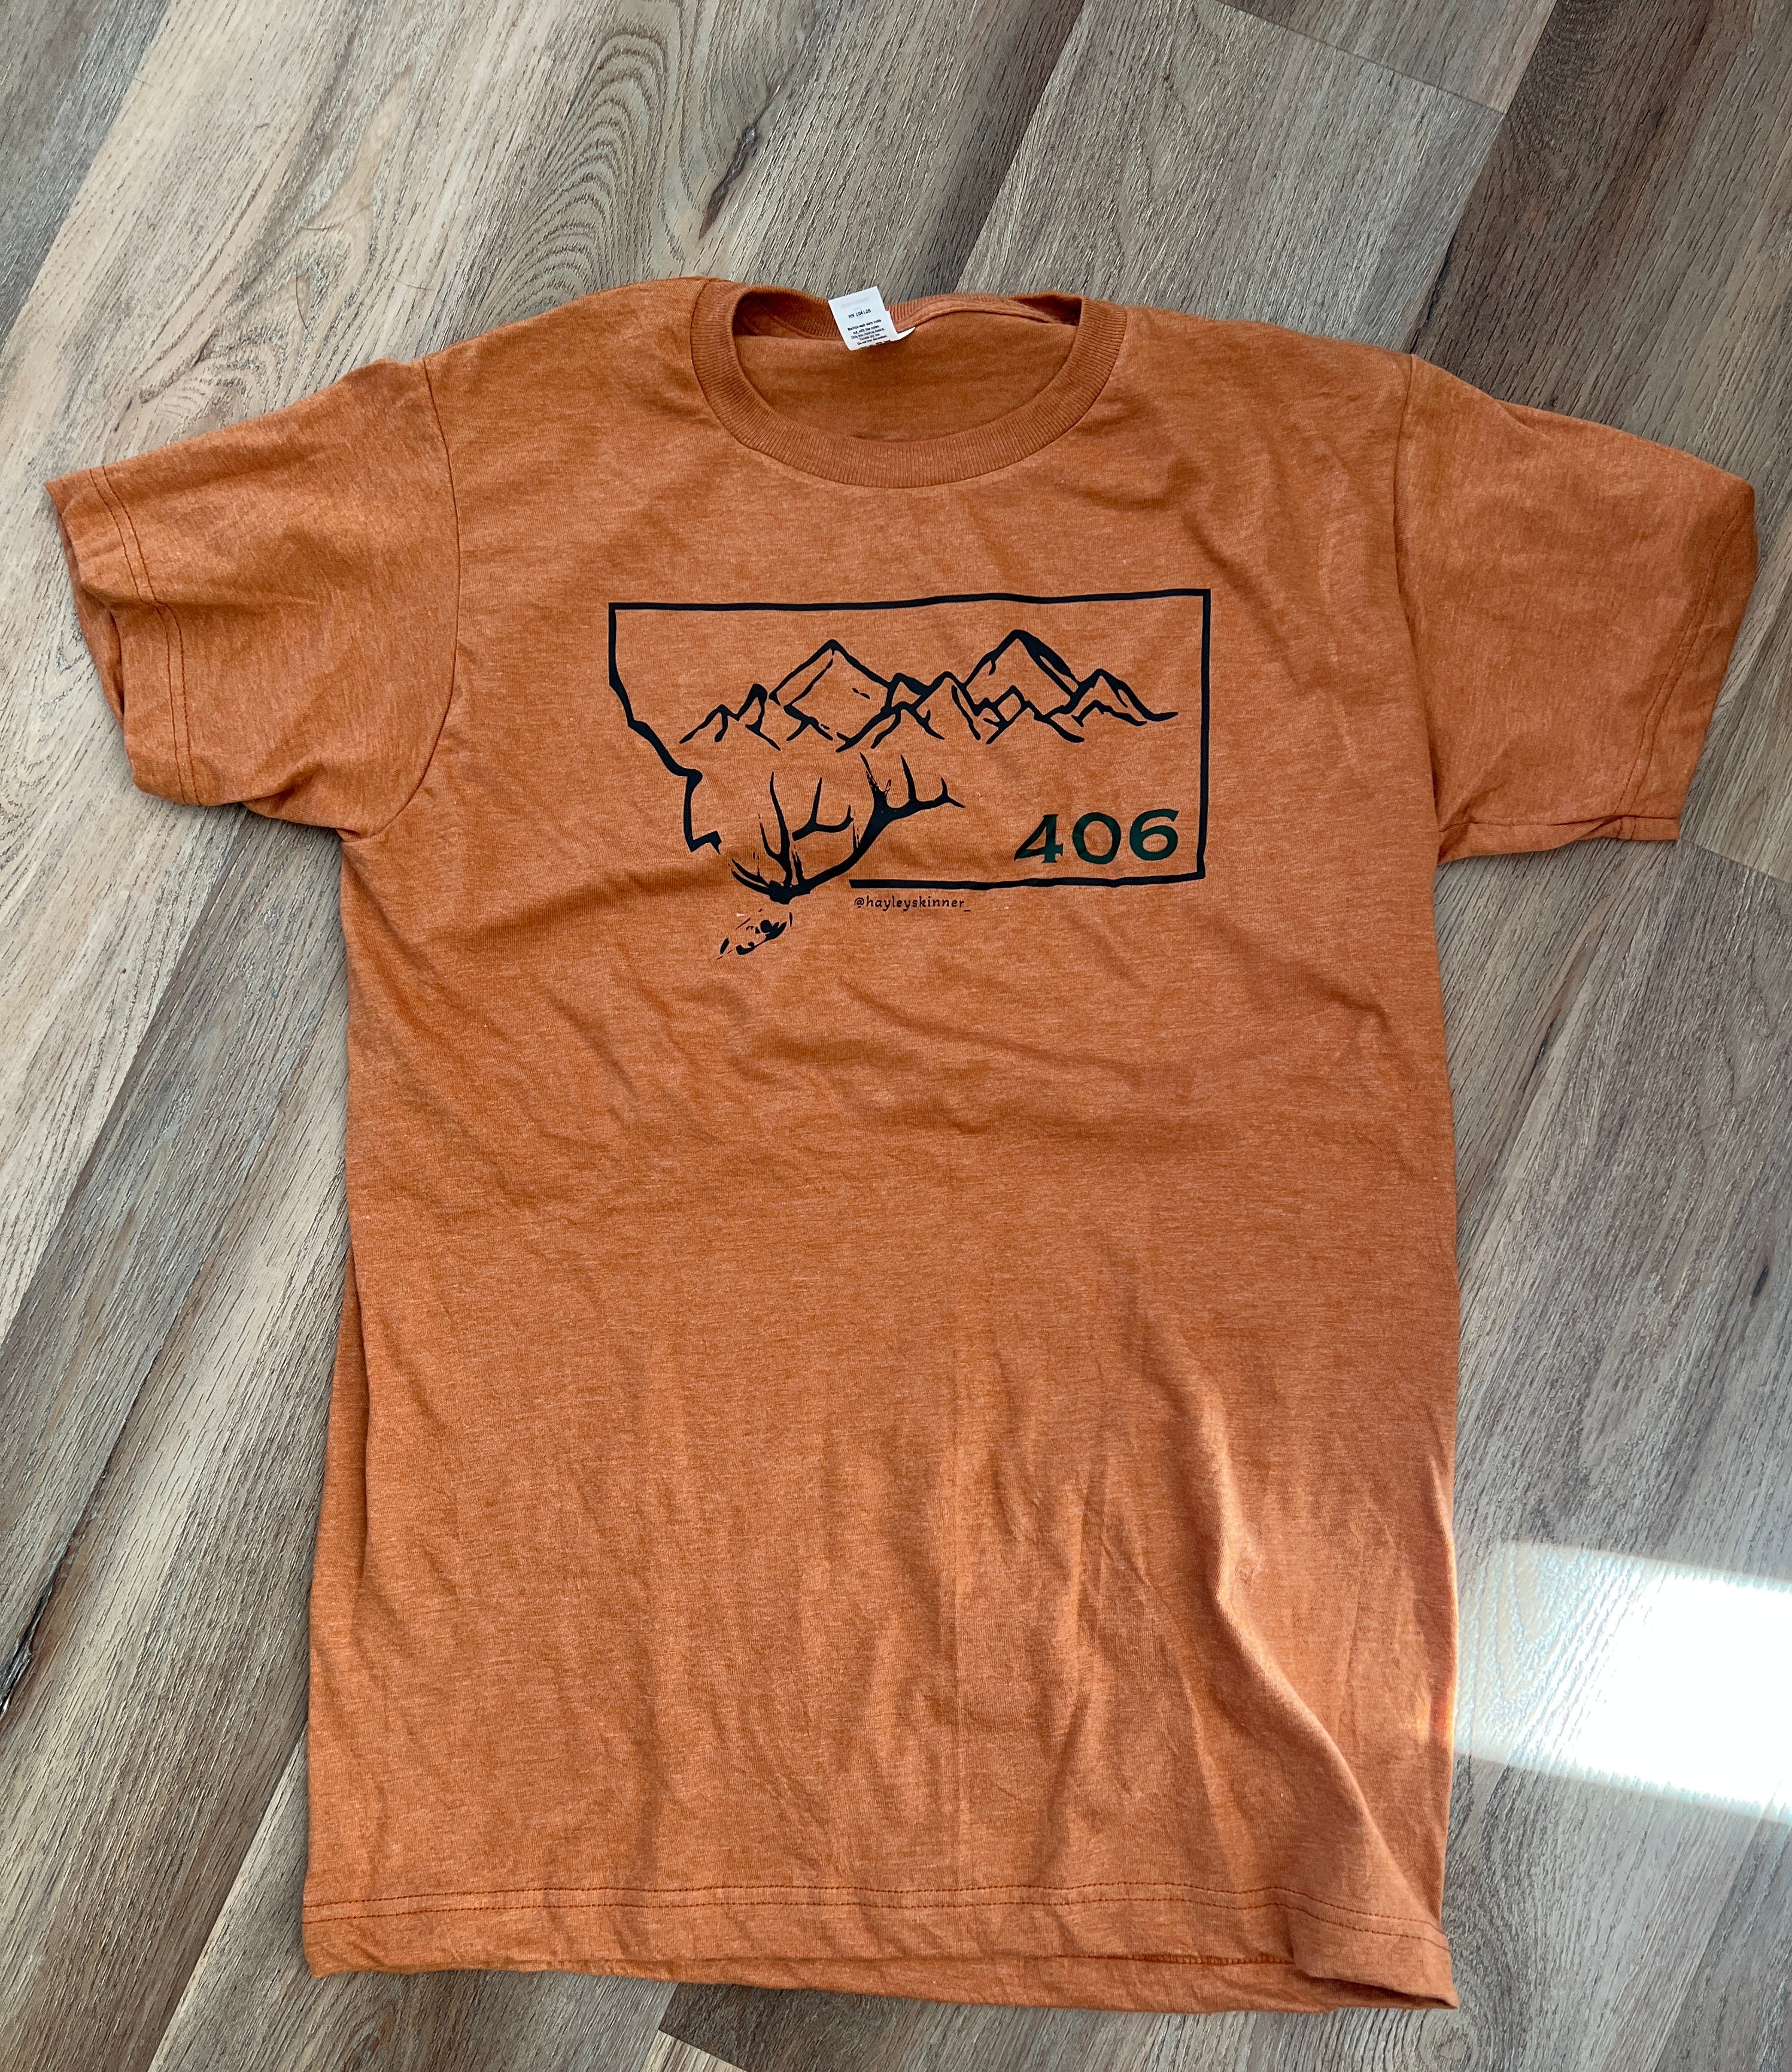 406 Tennessee Orange T-Shirt